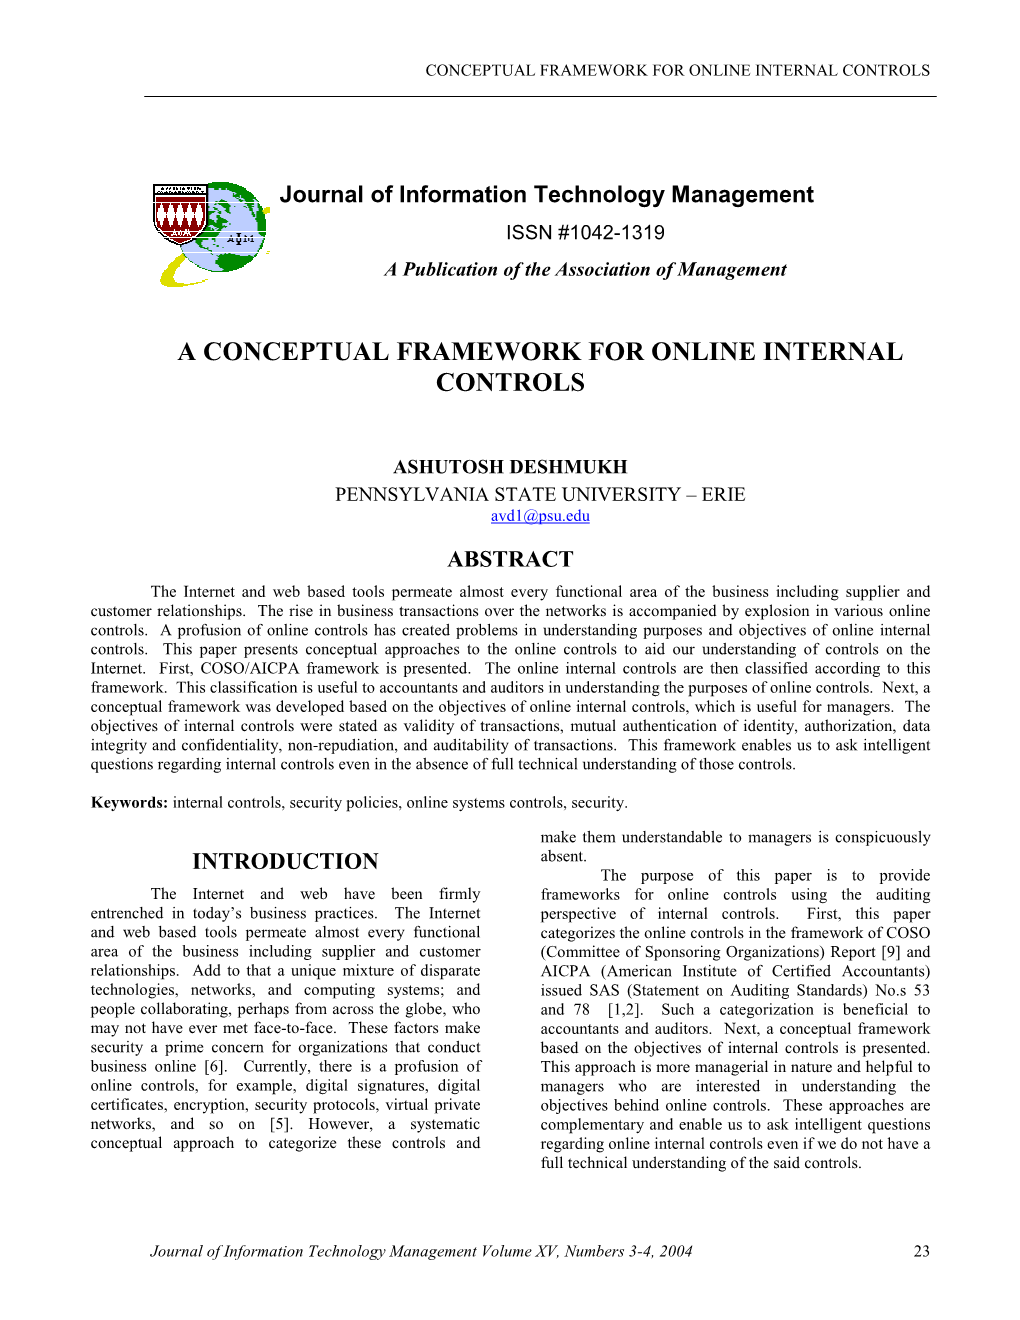 A Conceptual Framework for Online Internal Controls